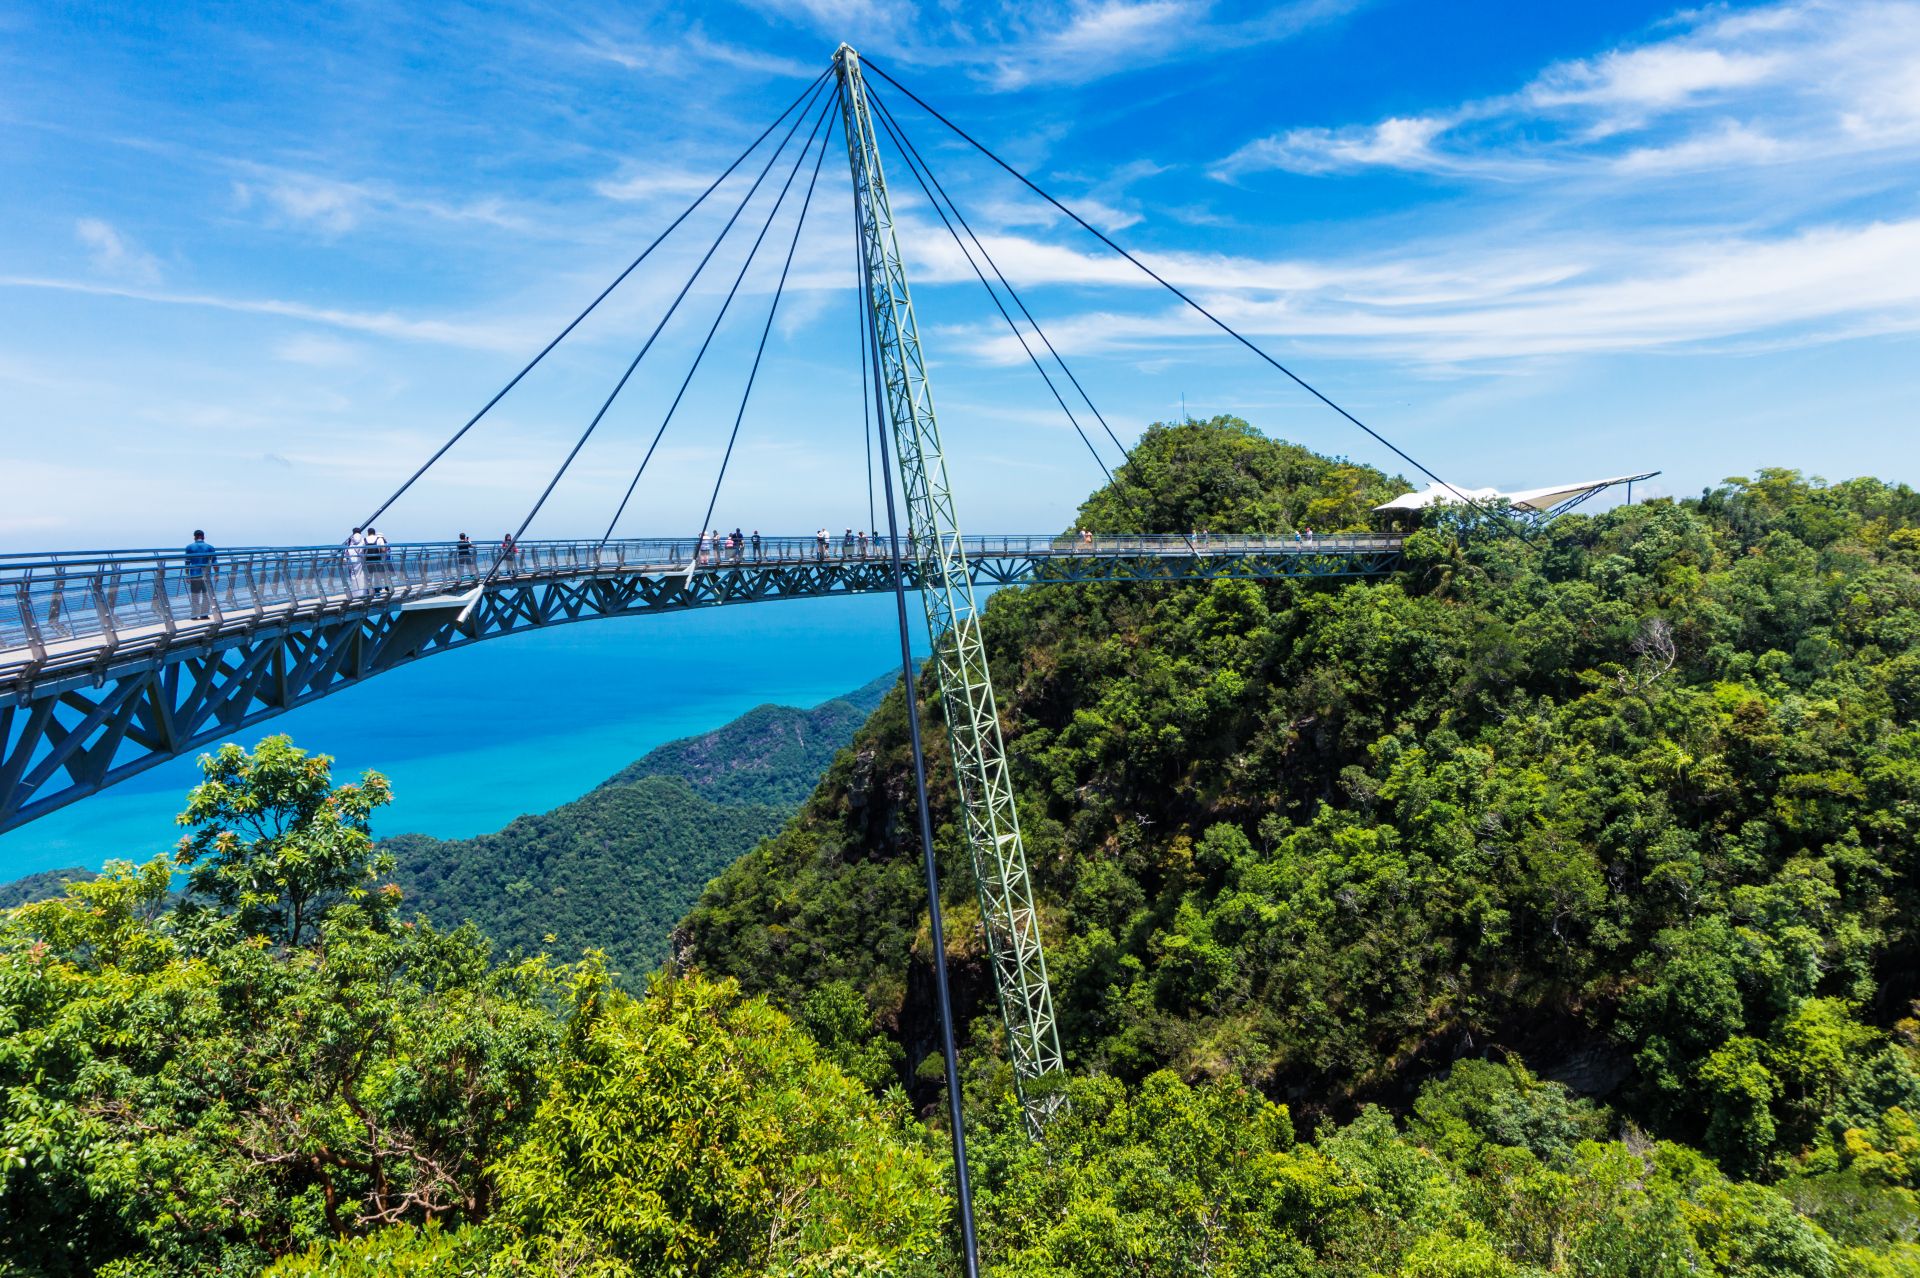 Sky bridge on the island of Langkawi